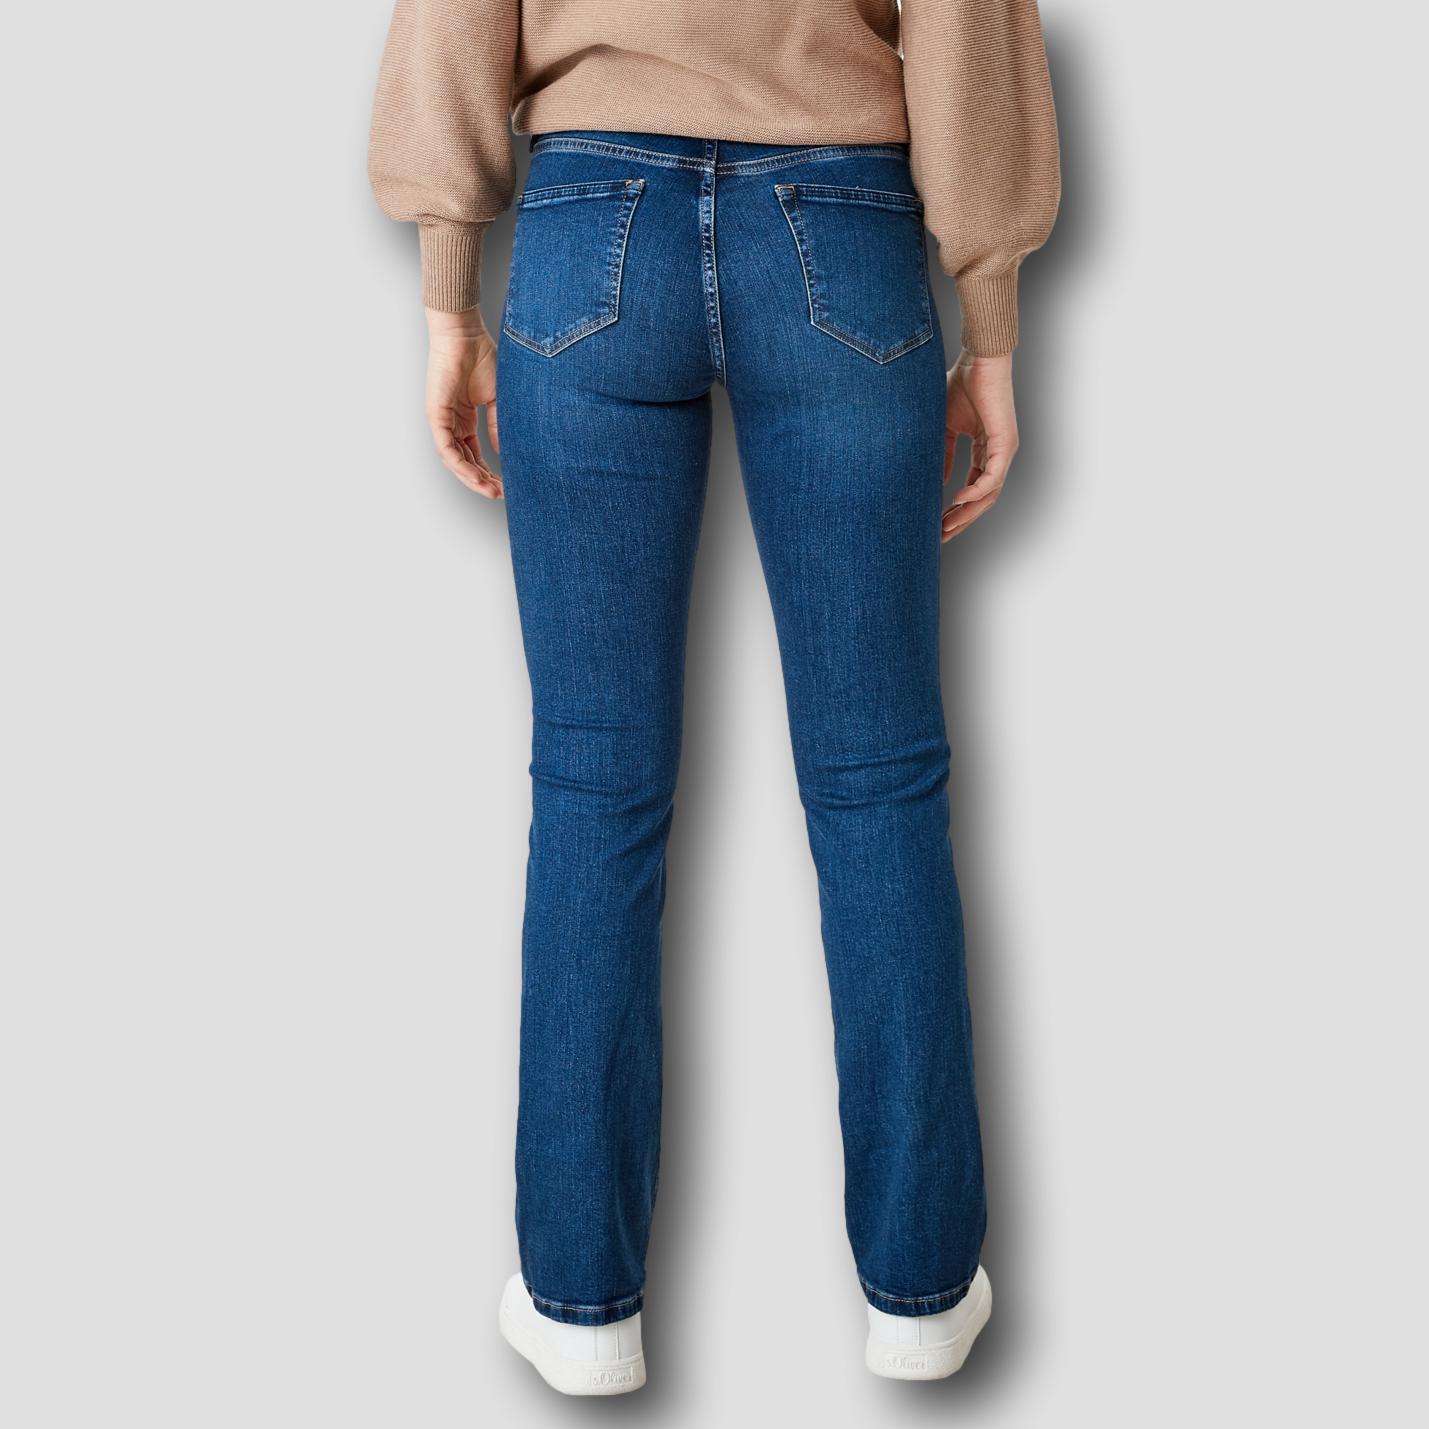 DAMEN Jeans Flared jeans Print Rabatt 73 % Blau S P&Y Flared jeans 